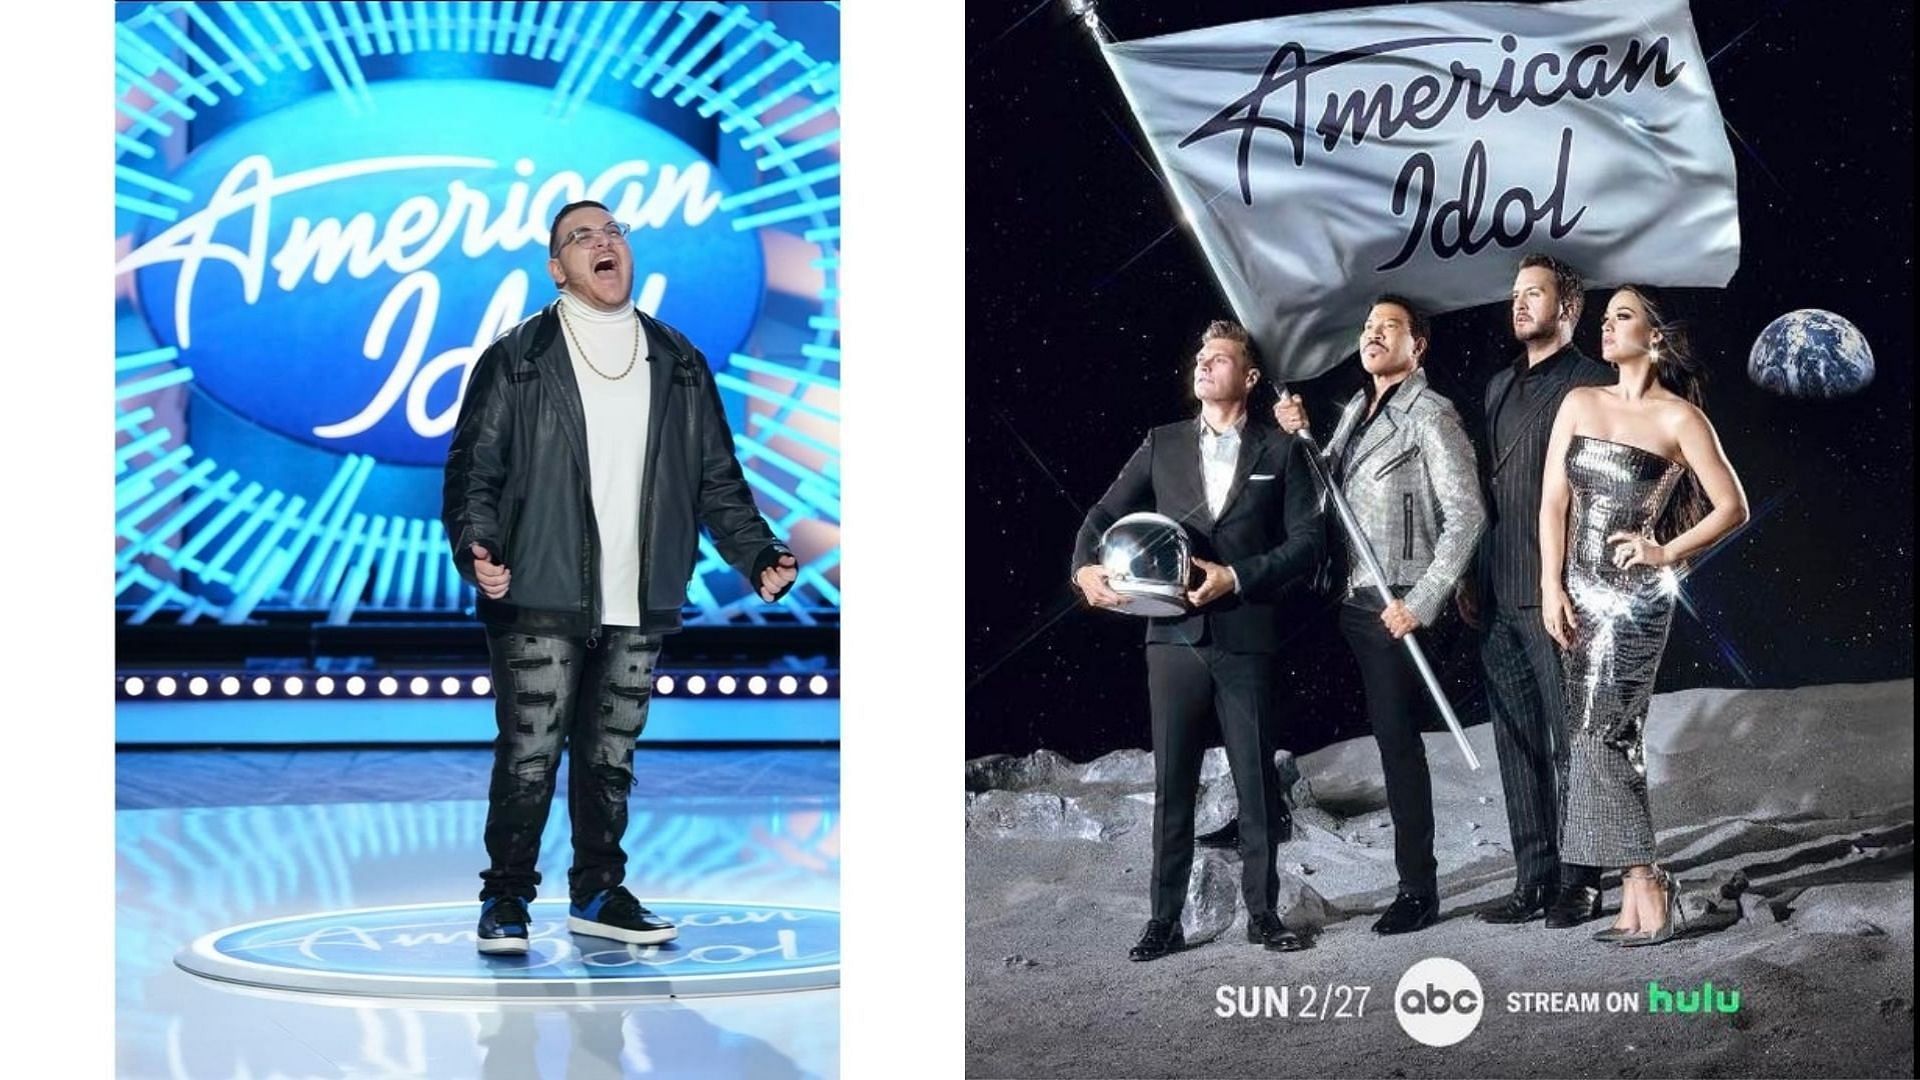 American Idol contestant Christian Guardino impressed the judges to earn a golden ticket (Image via christianguardino/Instagram)